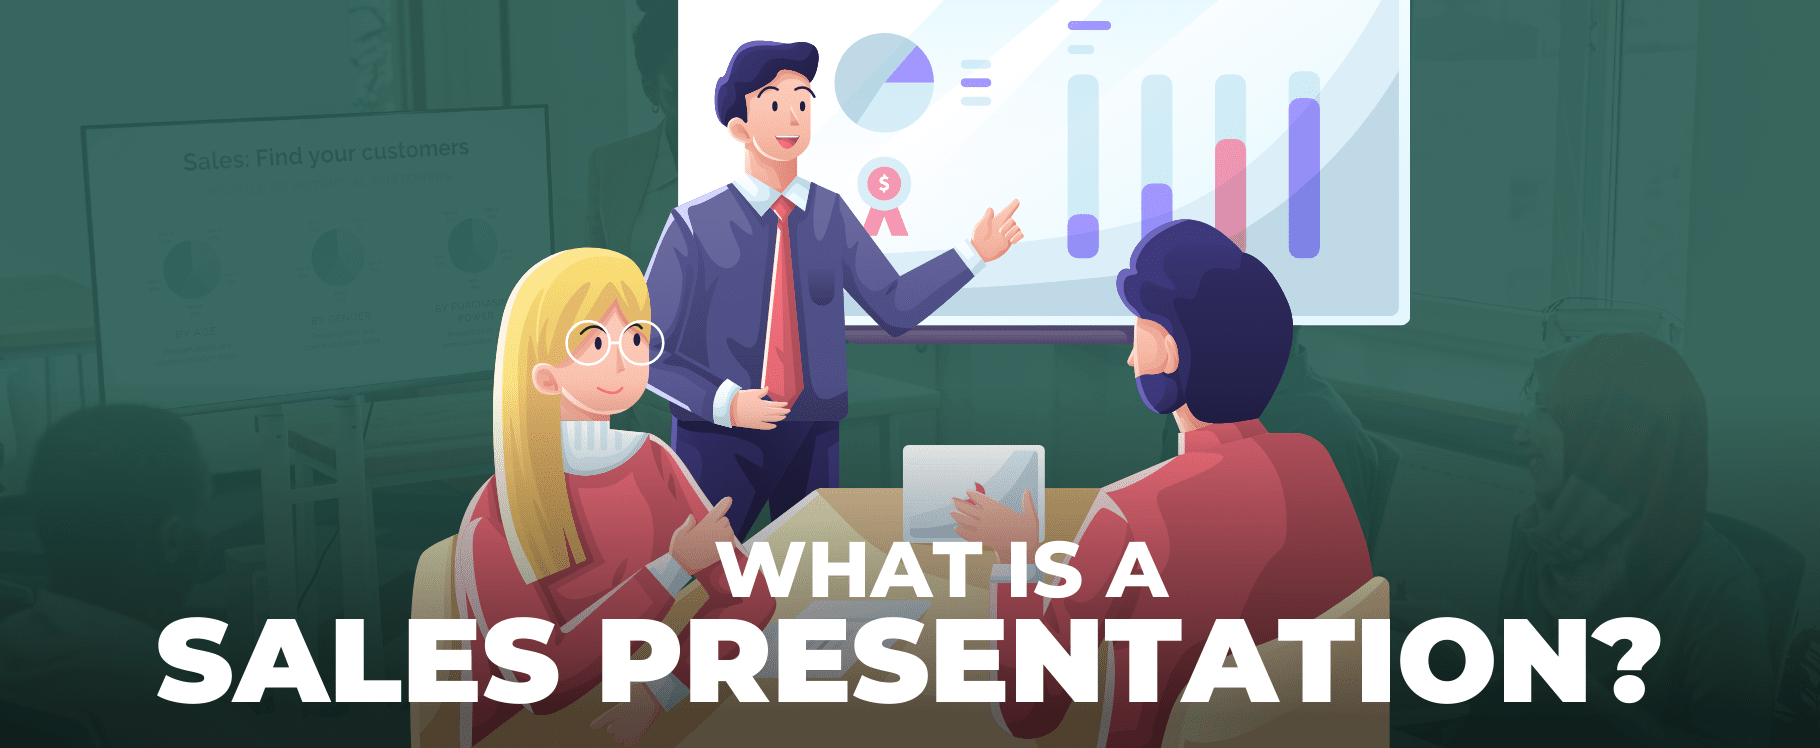 sales presentation definition in business